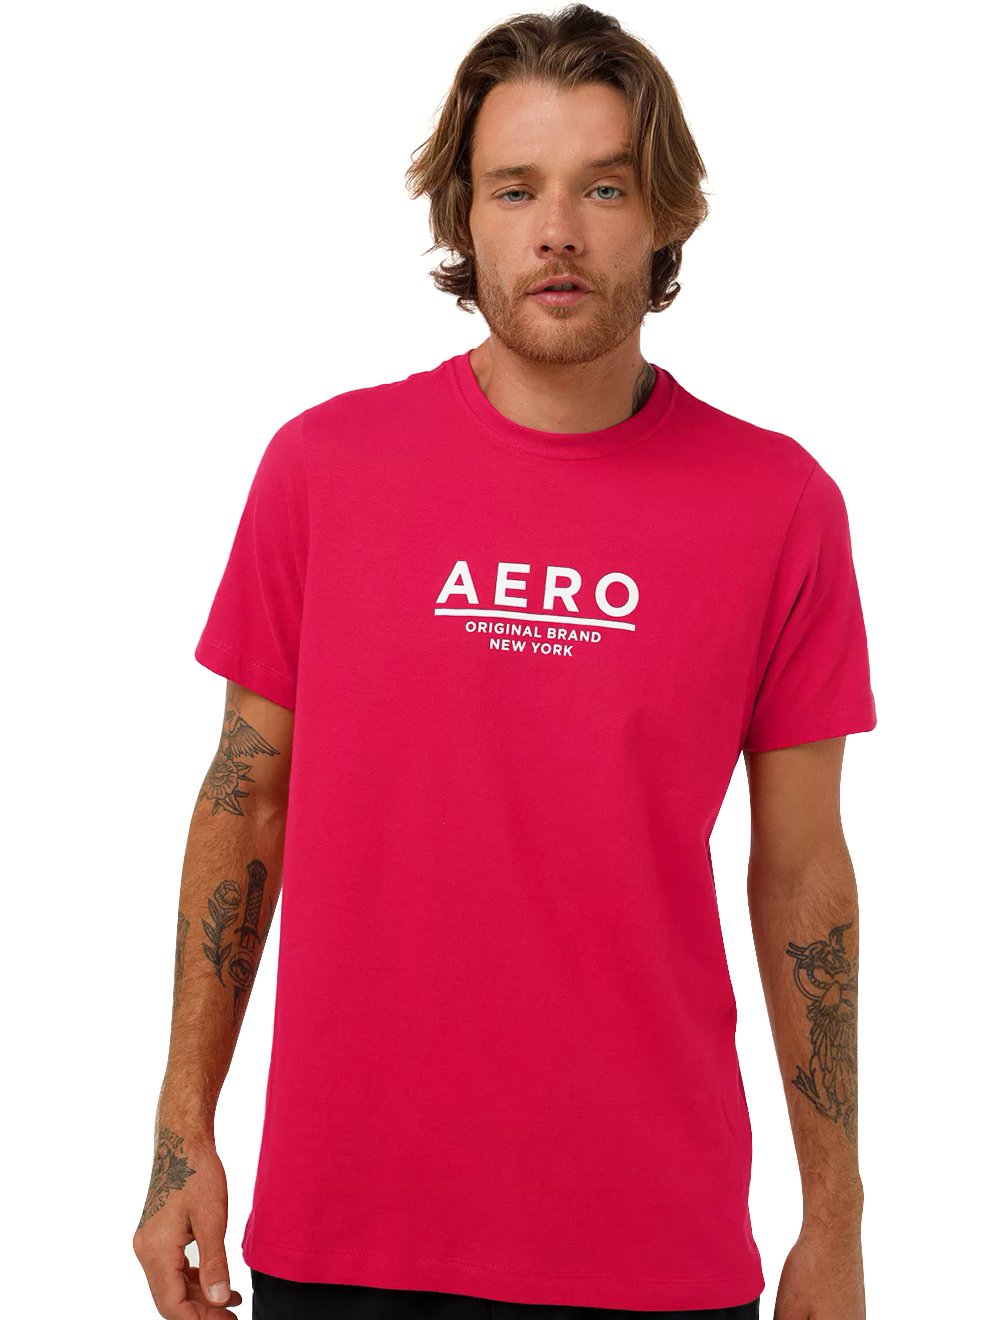 Camiseta Aeropostale Masculina Aero Original Brand New York Rosa Escuro